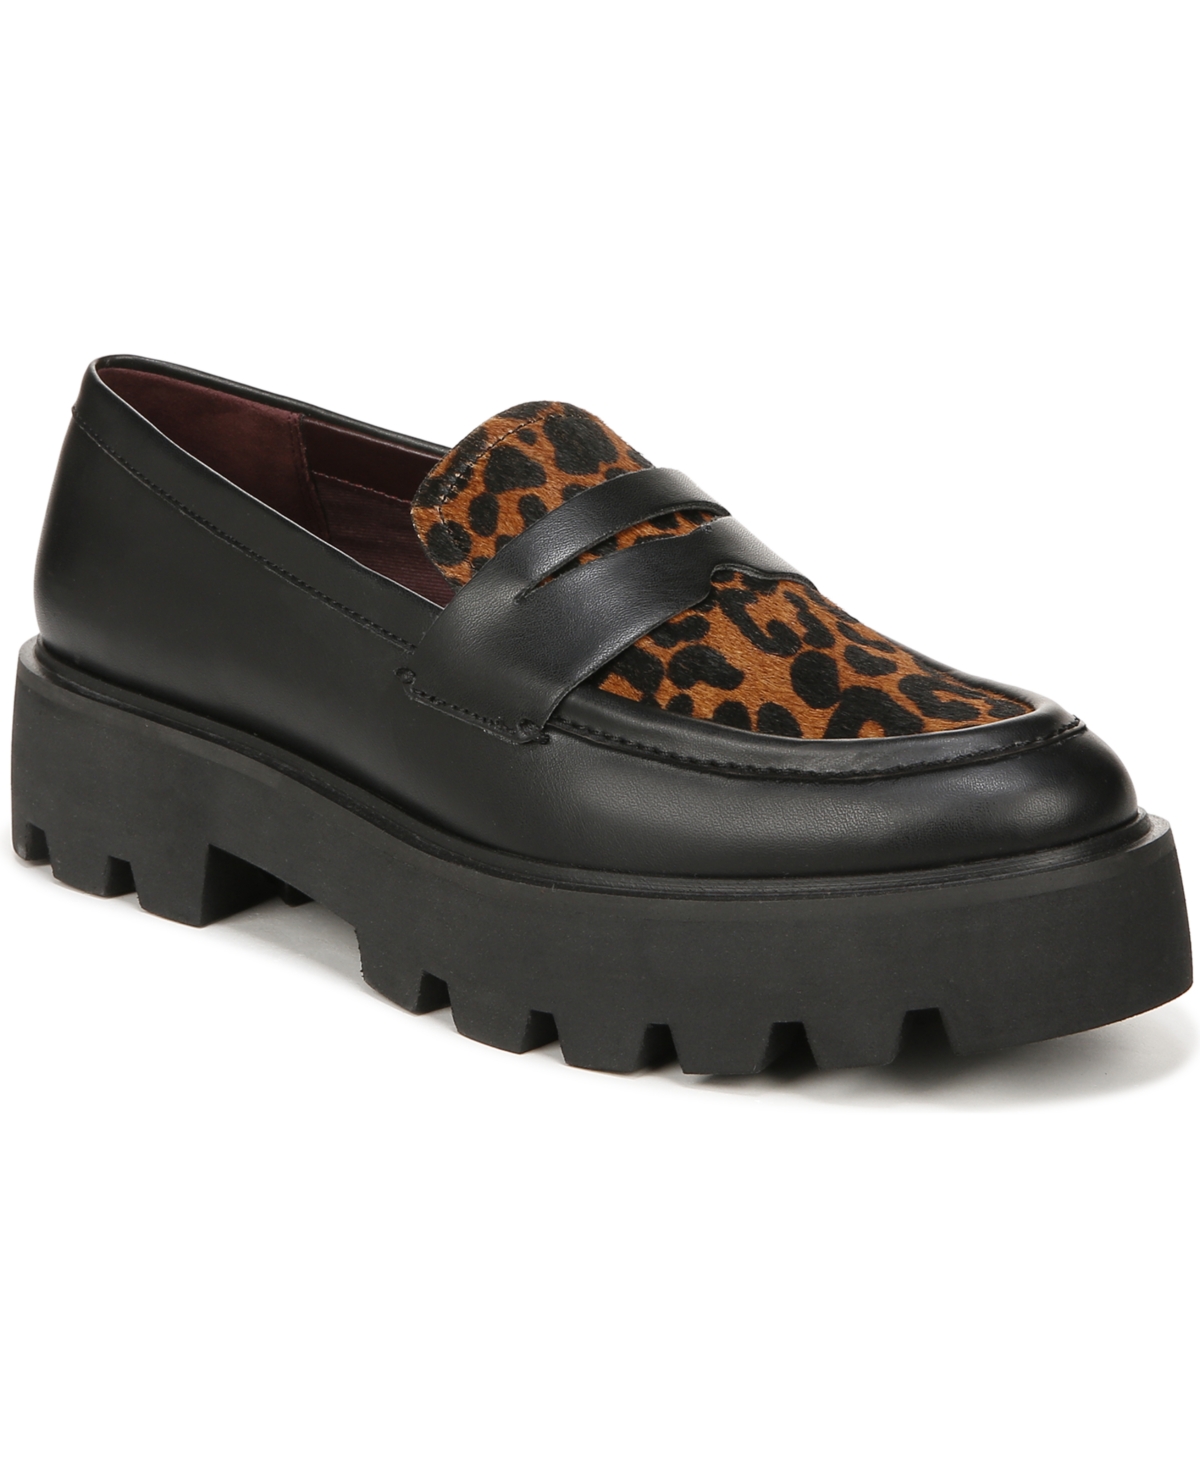 Women's Balin Lug Sole Loafers - Black Faux Leather/Leopard Print Hair